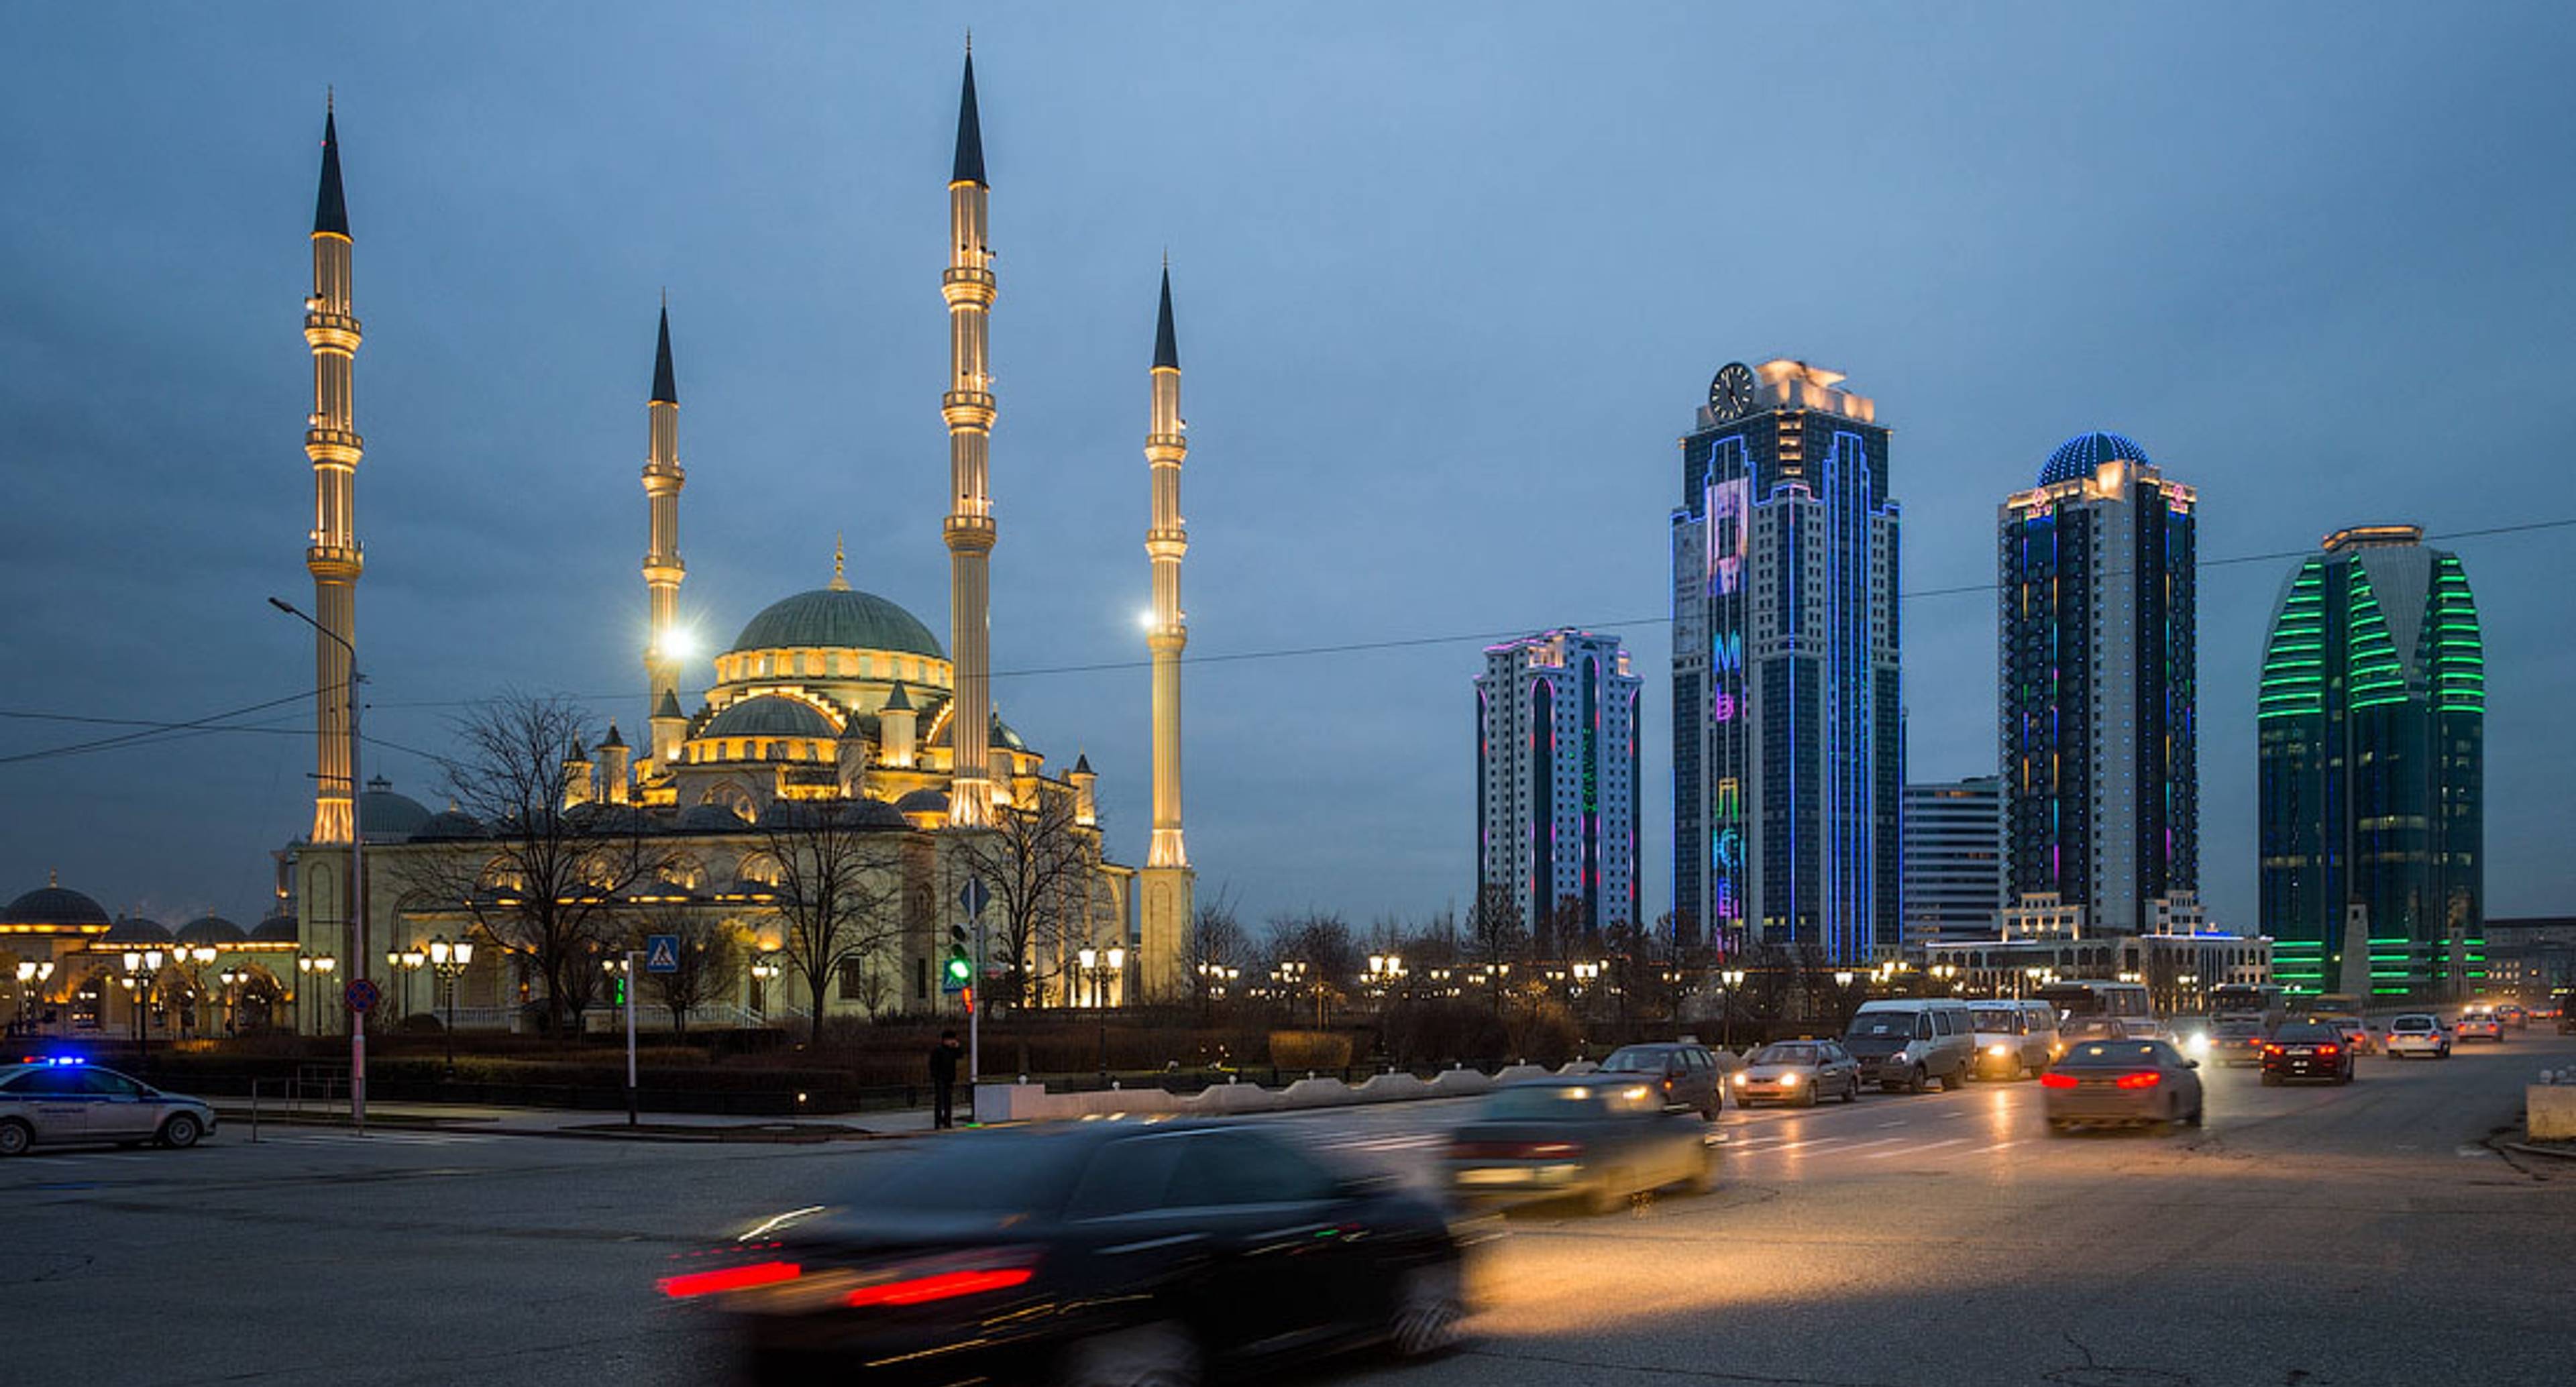 Arrival in Grozny